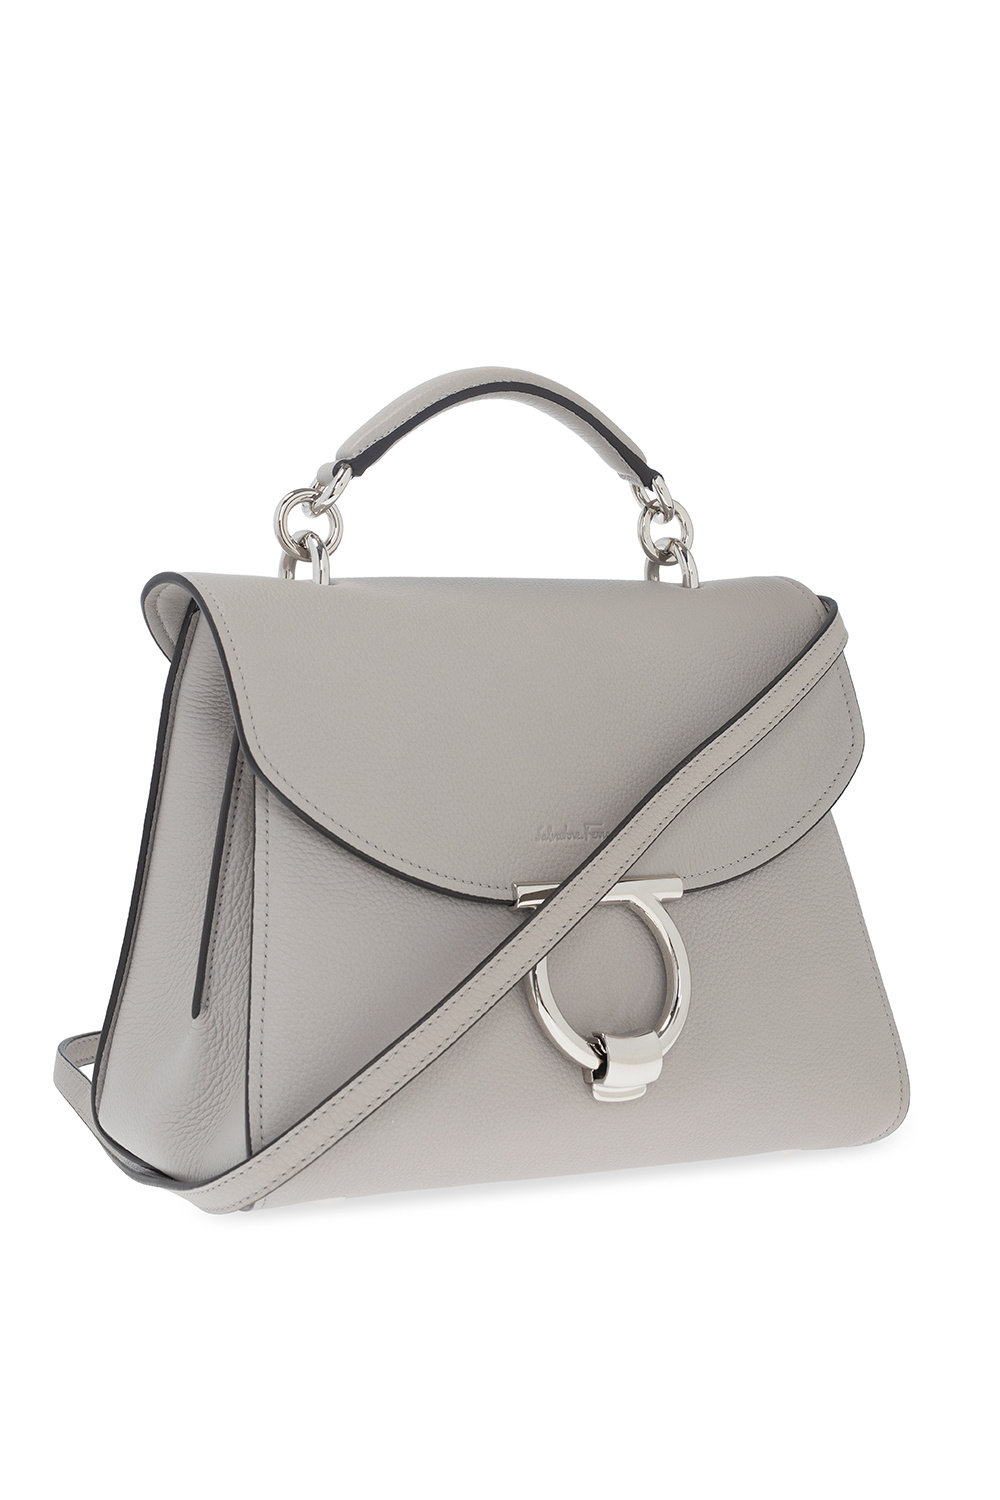 Salvatore Ferragamo 'Gancini' shoulder bag | Women's Bags 